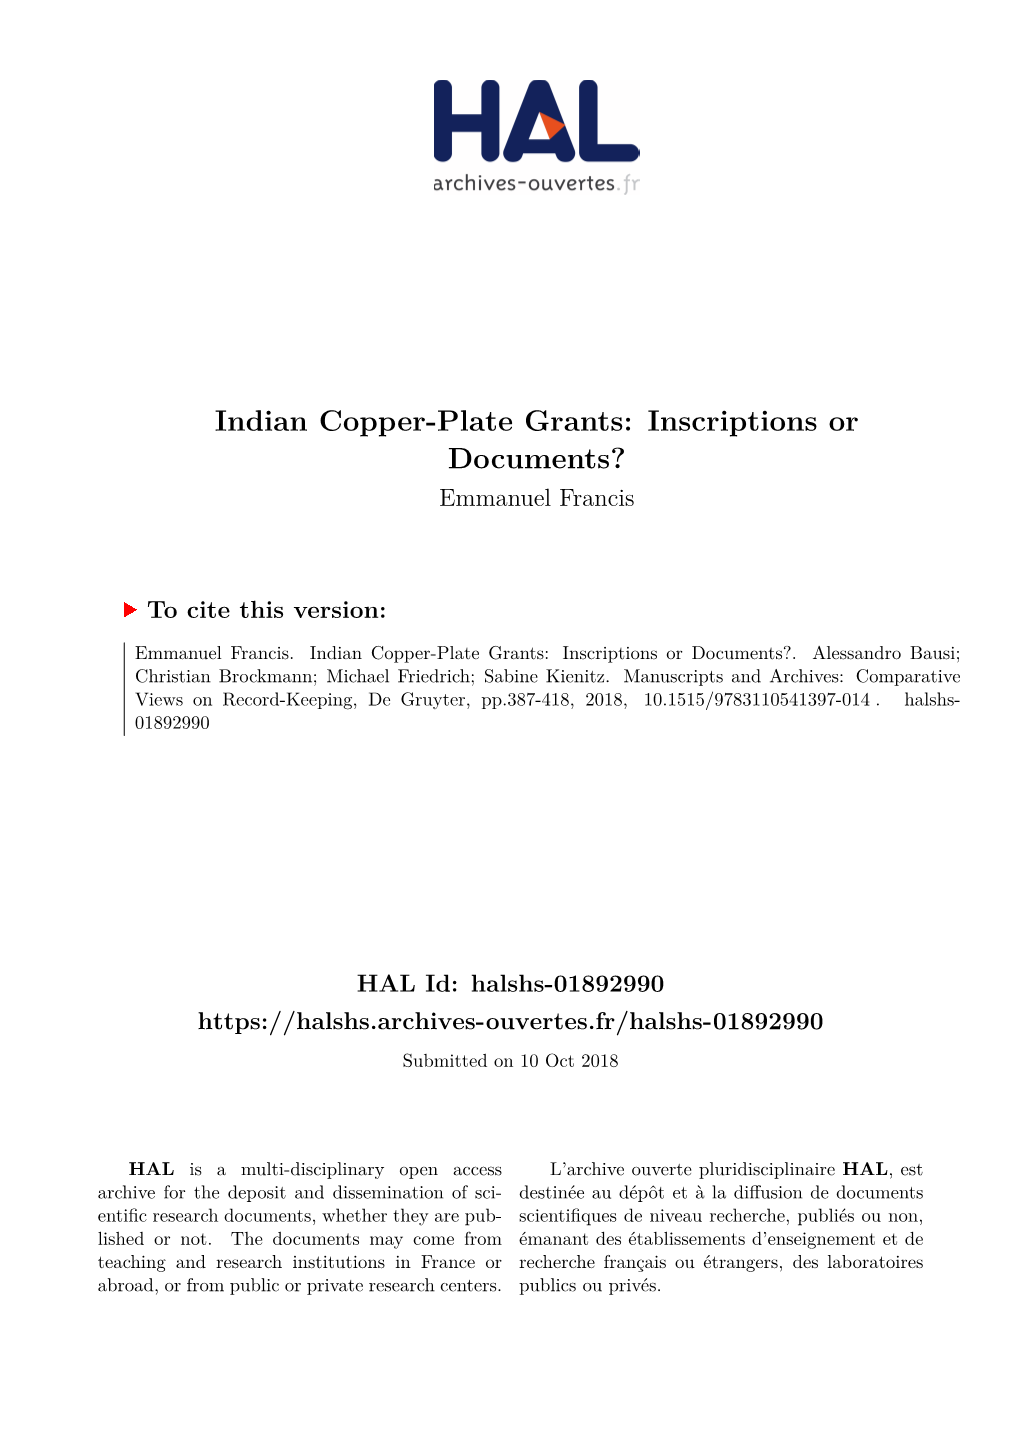 Indian Copper-Plate Grants: Inscriptions Or Documents? Emmanuel Francis